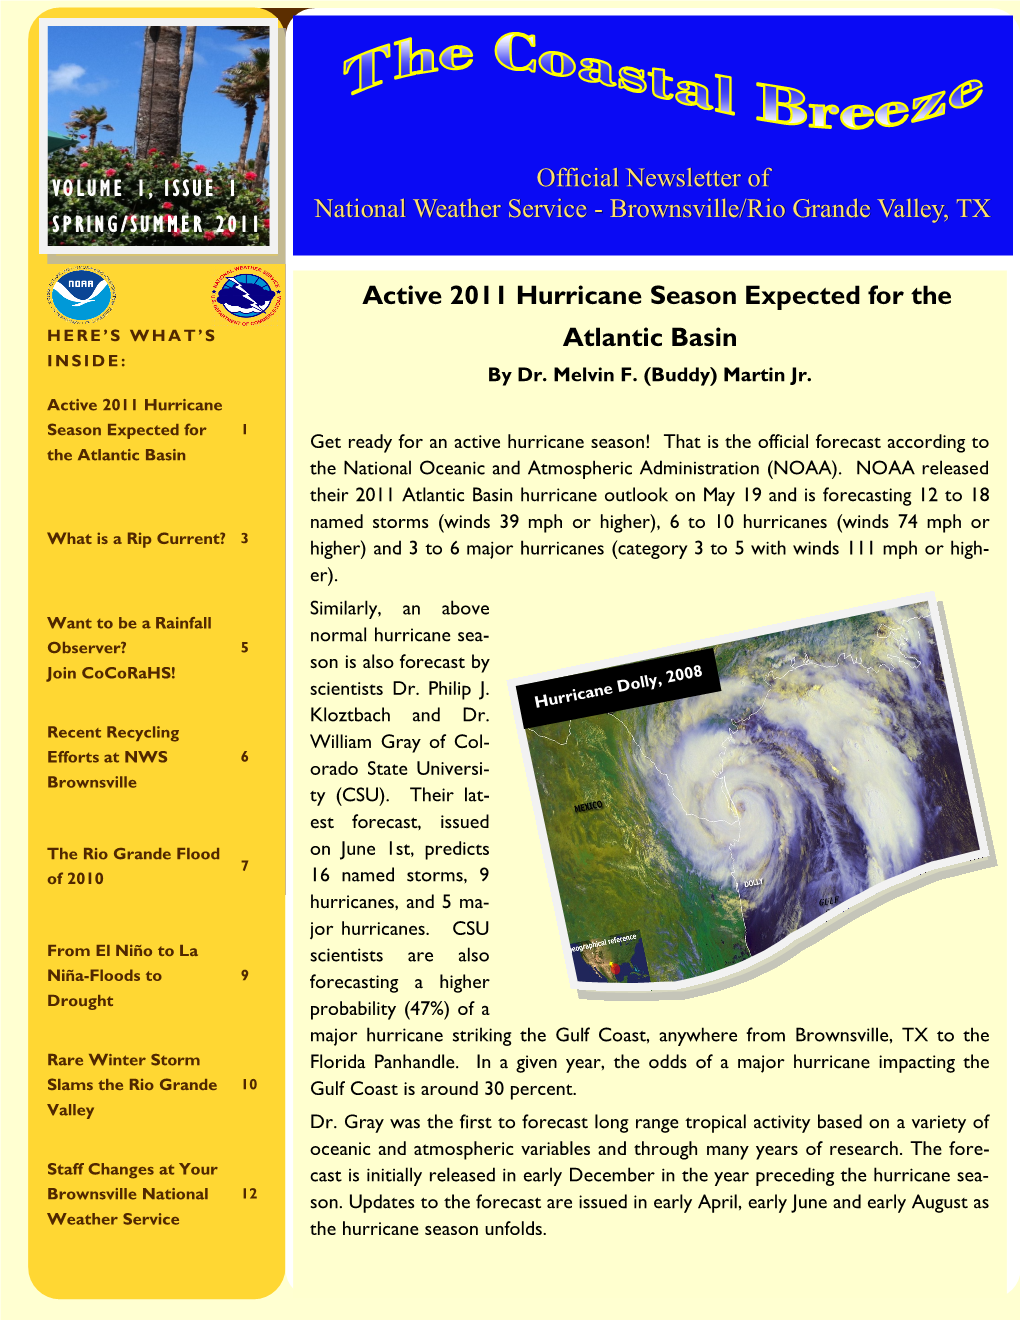 Active 2011 Hurricane Season Expected for the Atlantic Basin